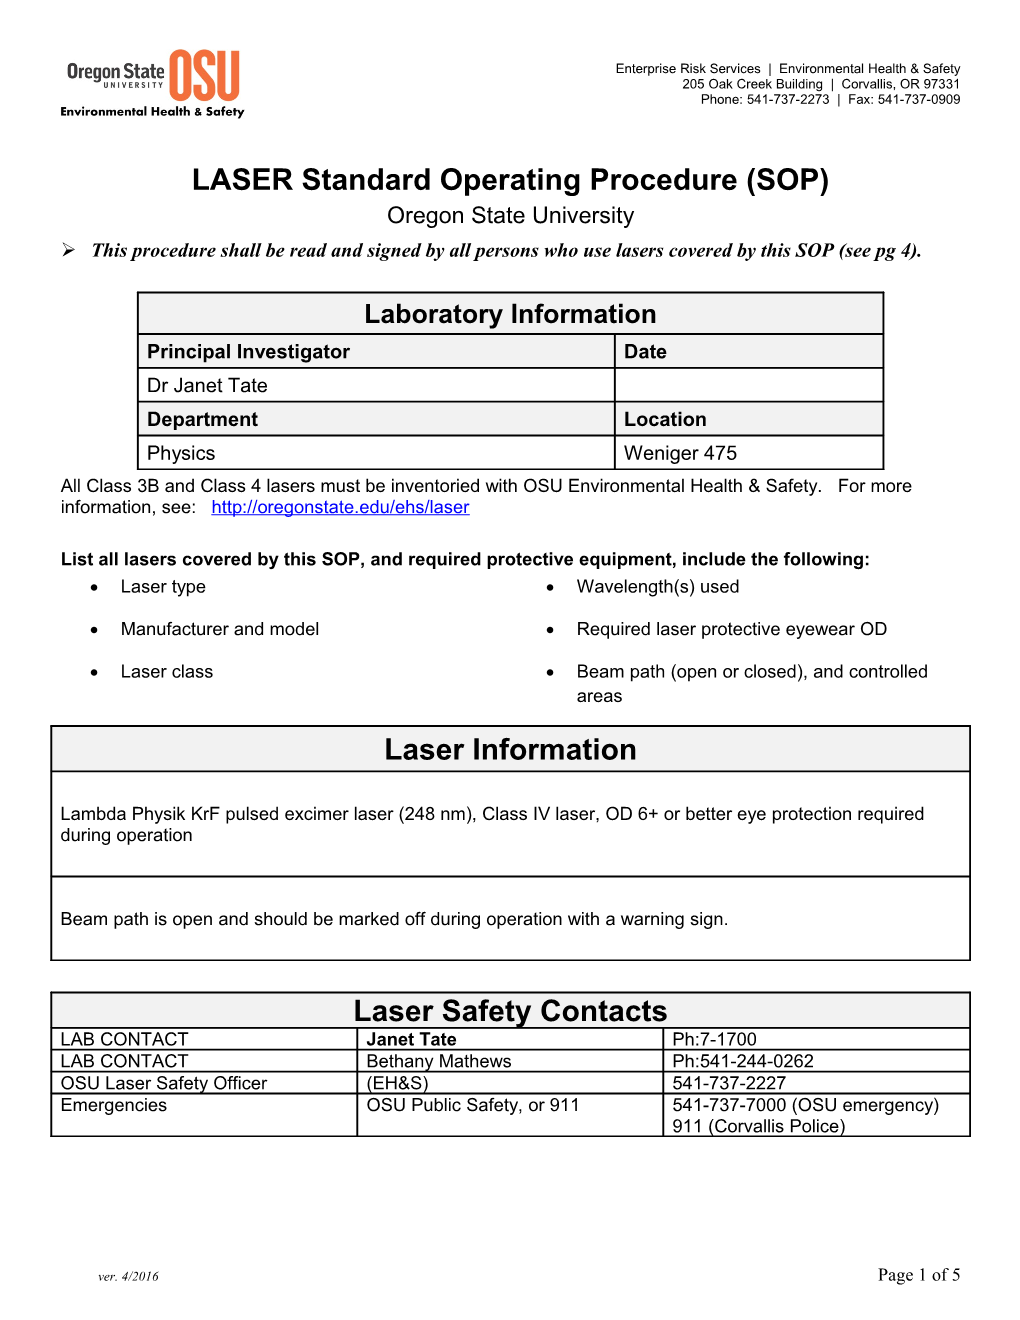 LASER Standard Operating Procedure (SOP)